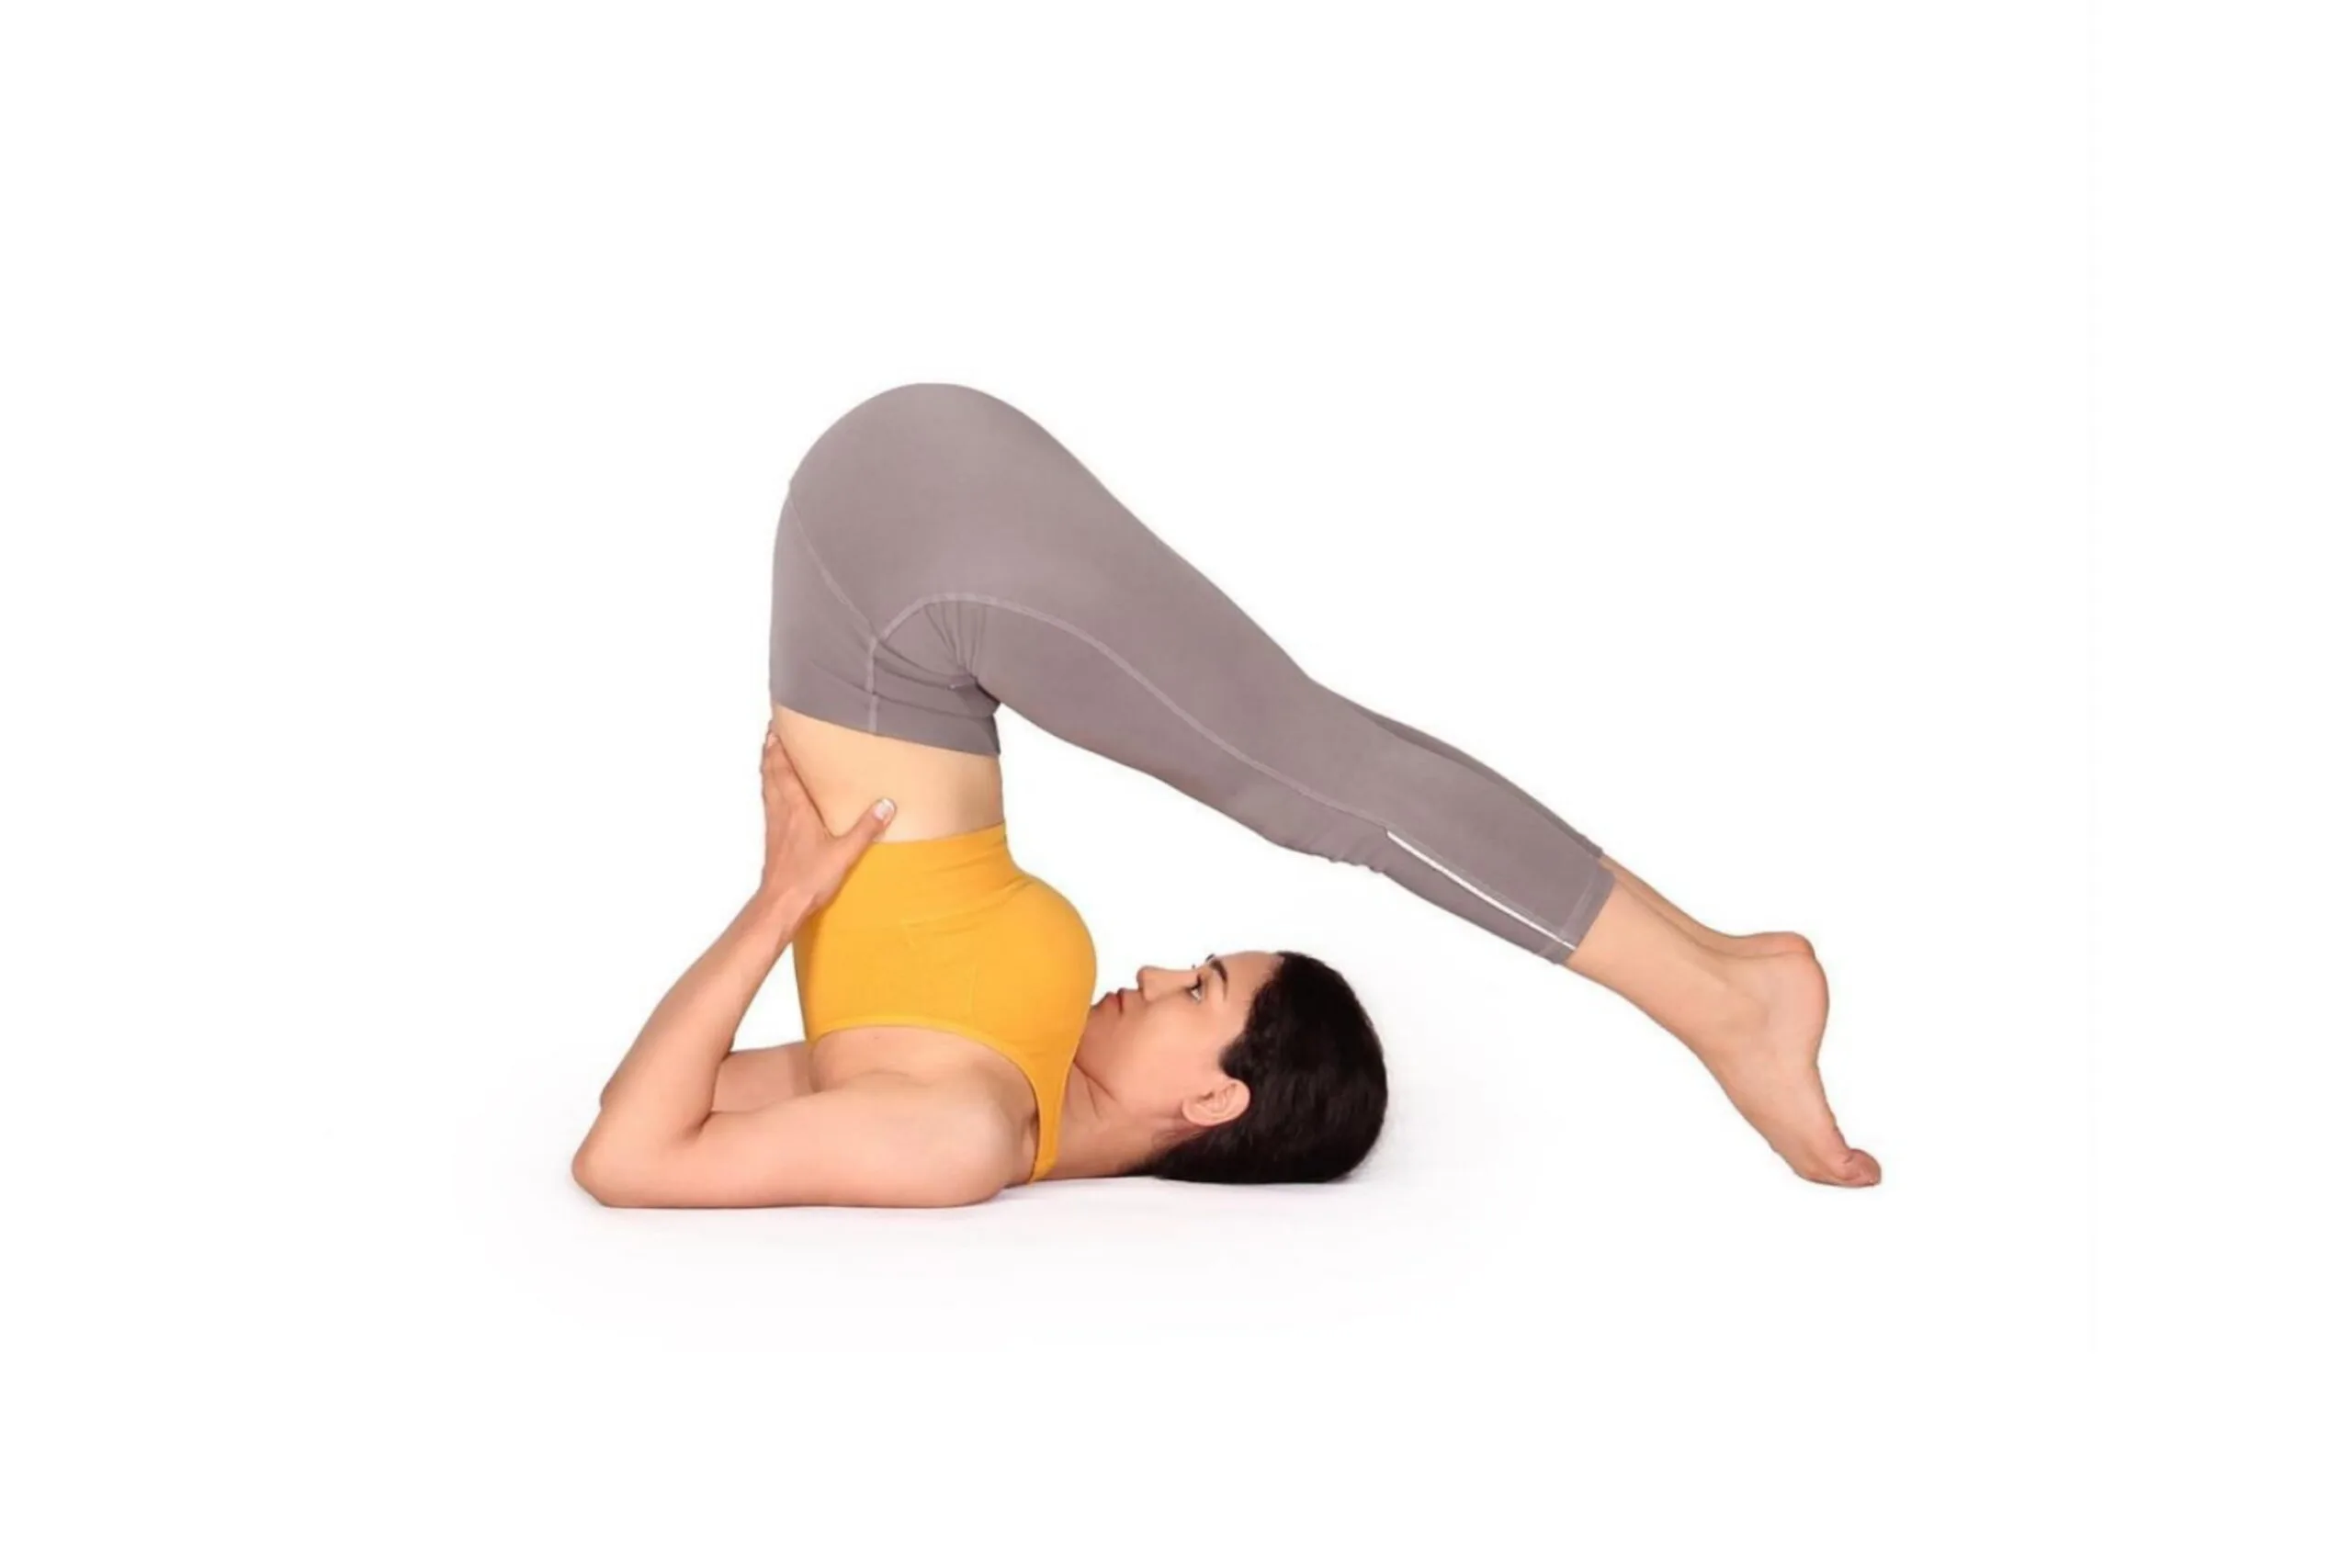 rediff.com: Yoga poses for hypothyroidism